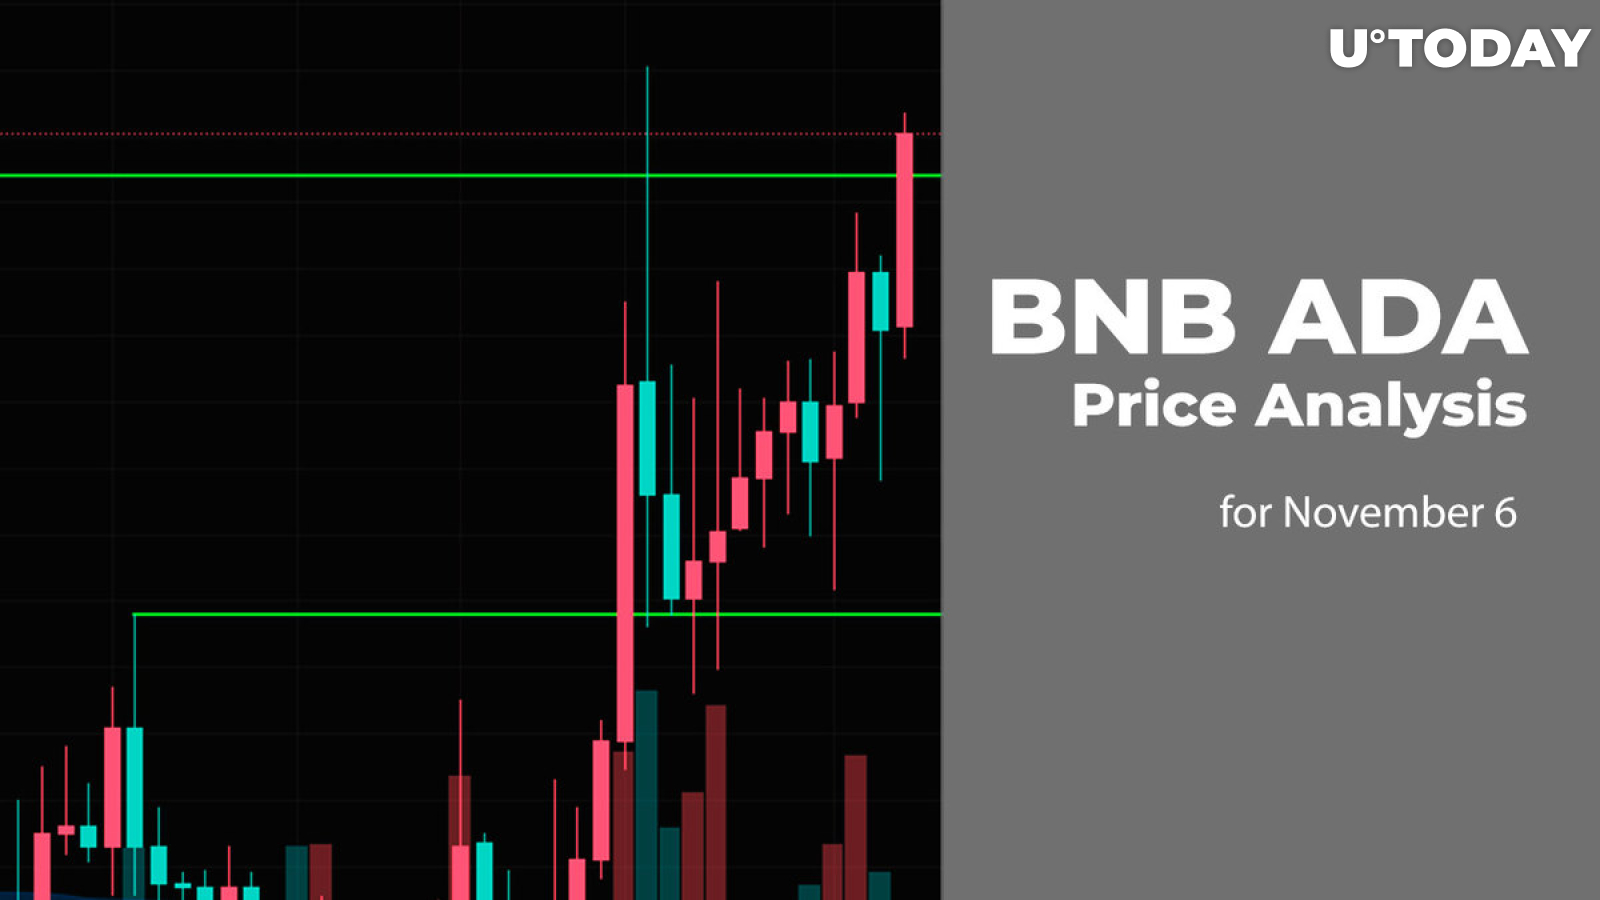 BNB and ADA Price Analysis for November 6